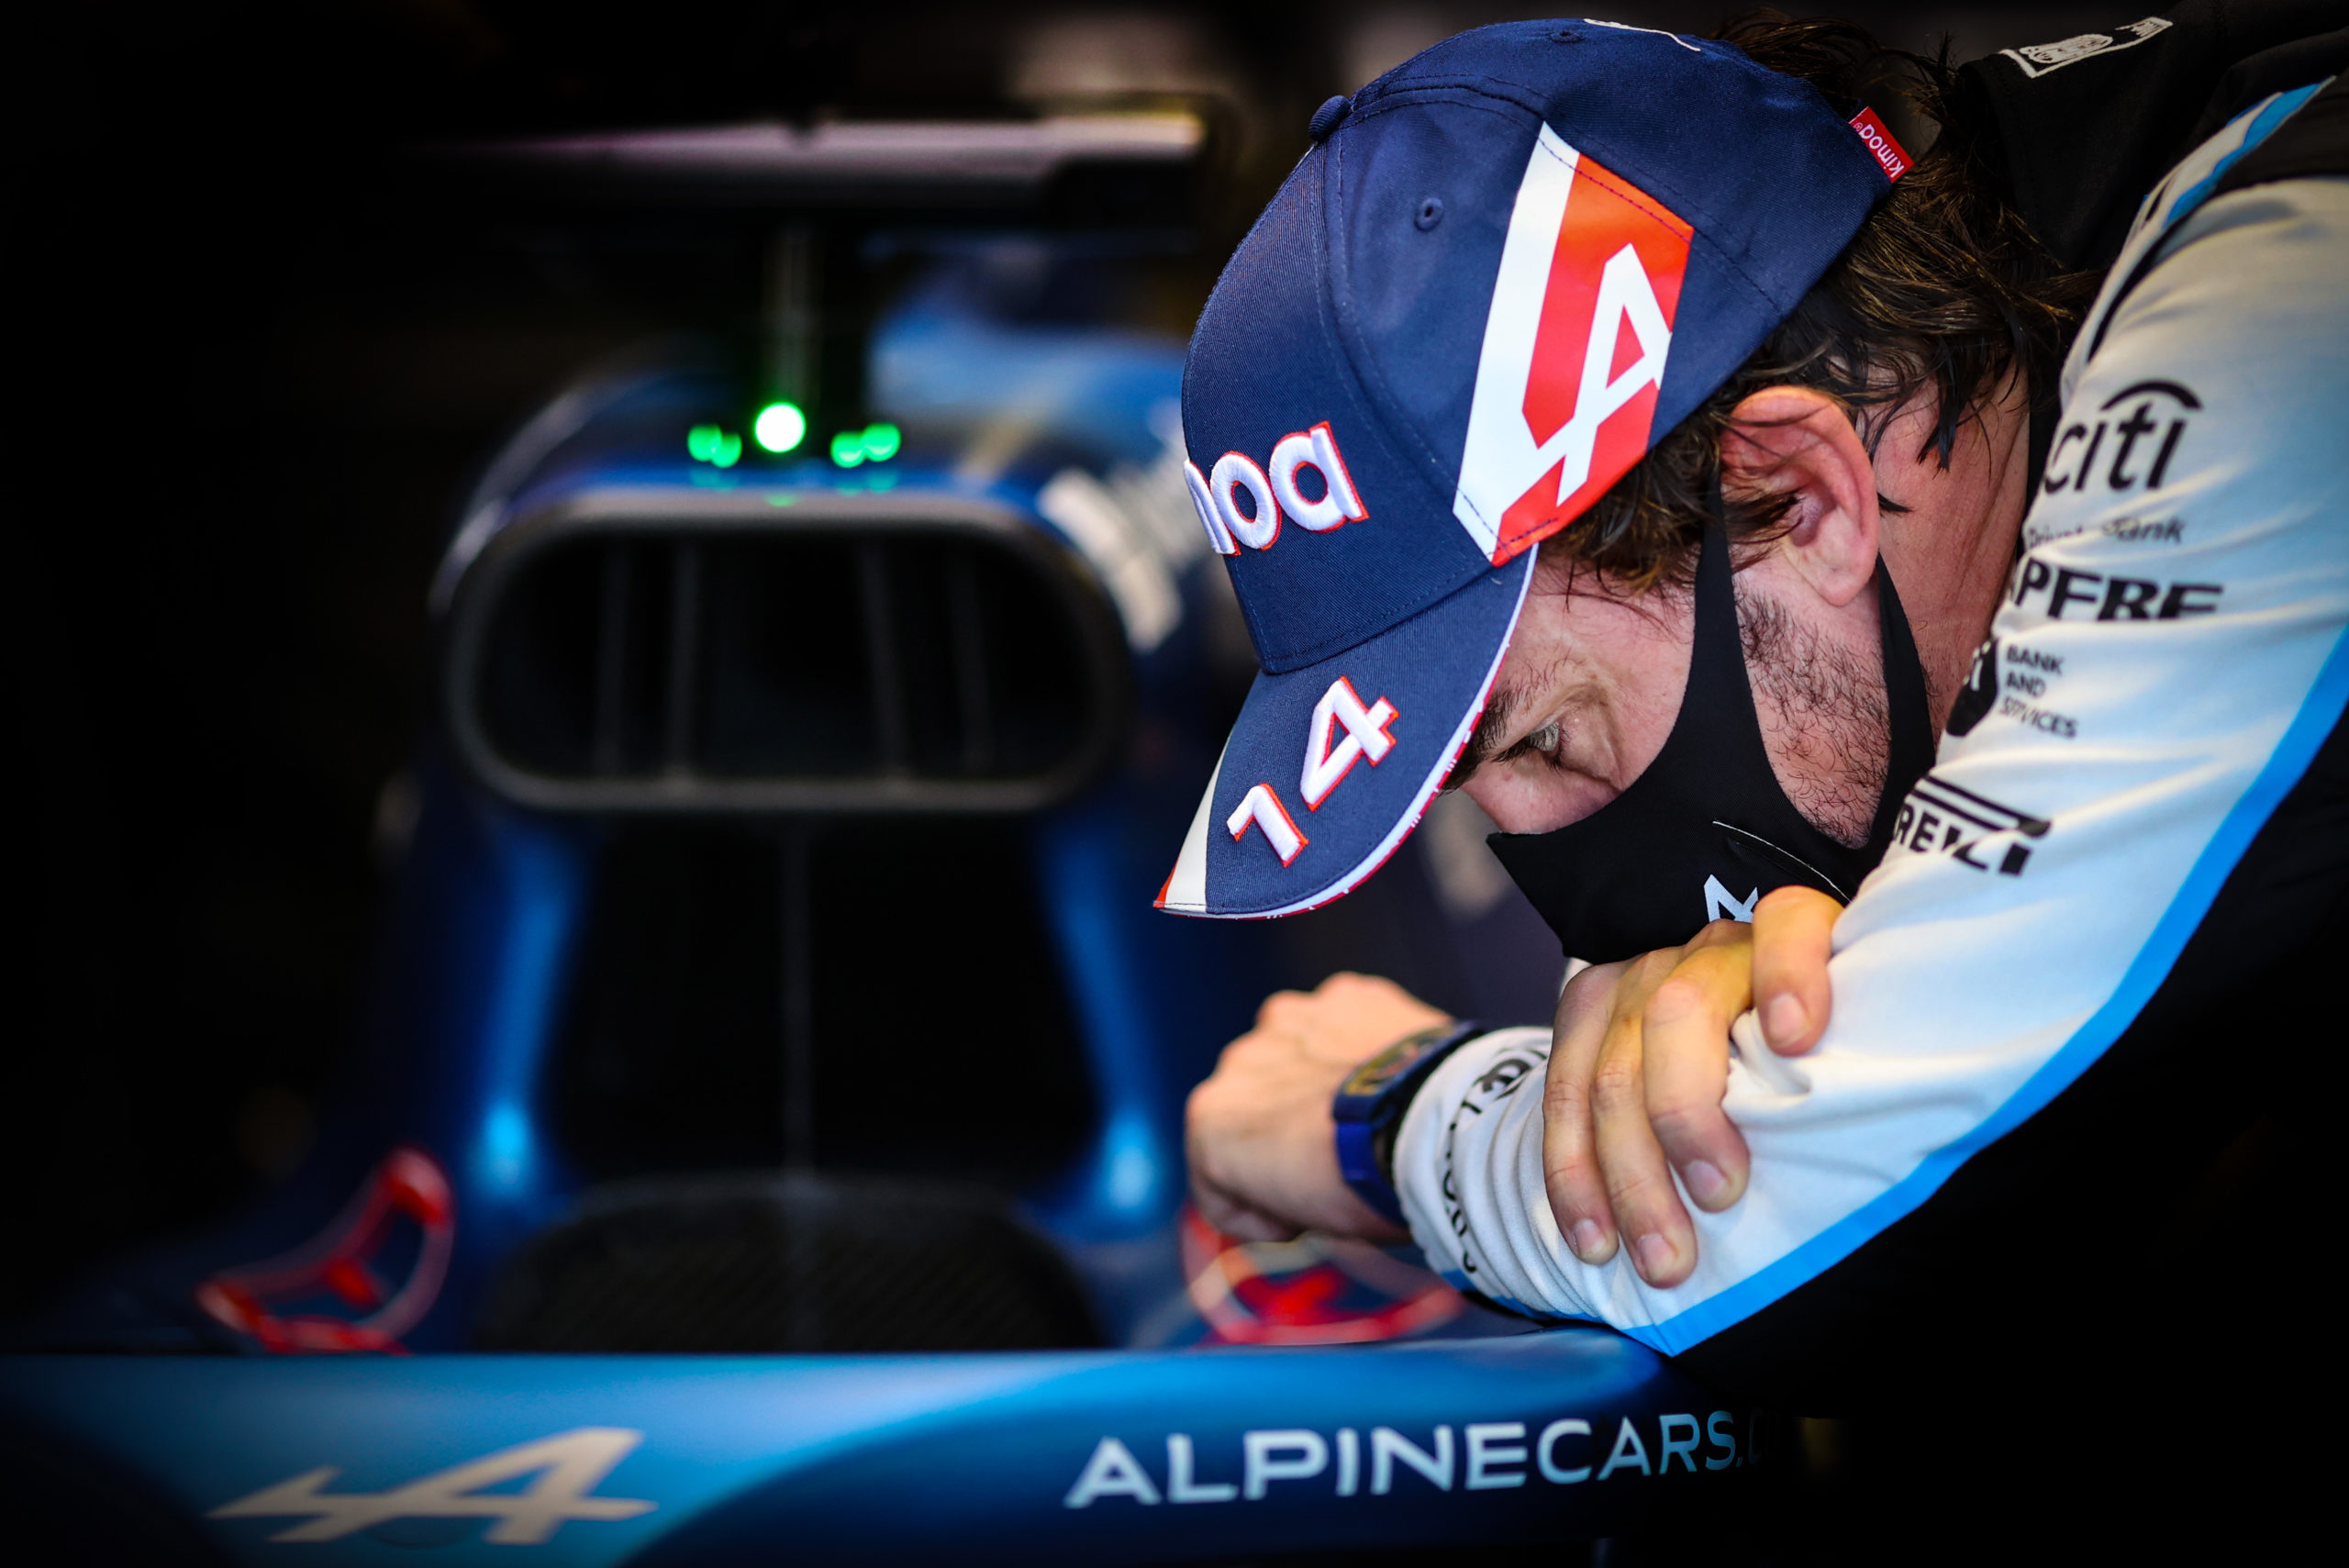 F1 - Fernando Alonso attend le Grand Prix de France avec impatience